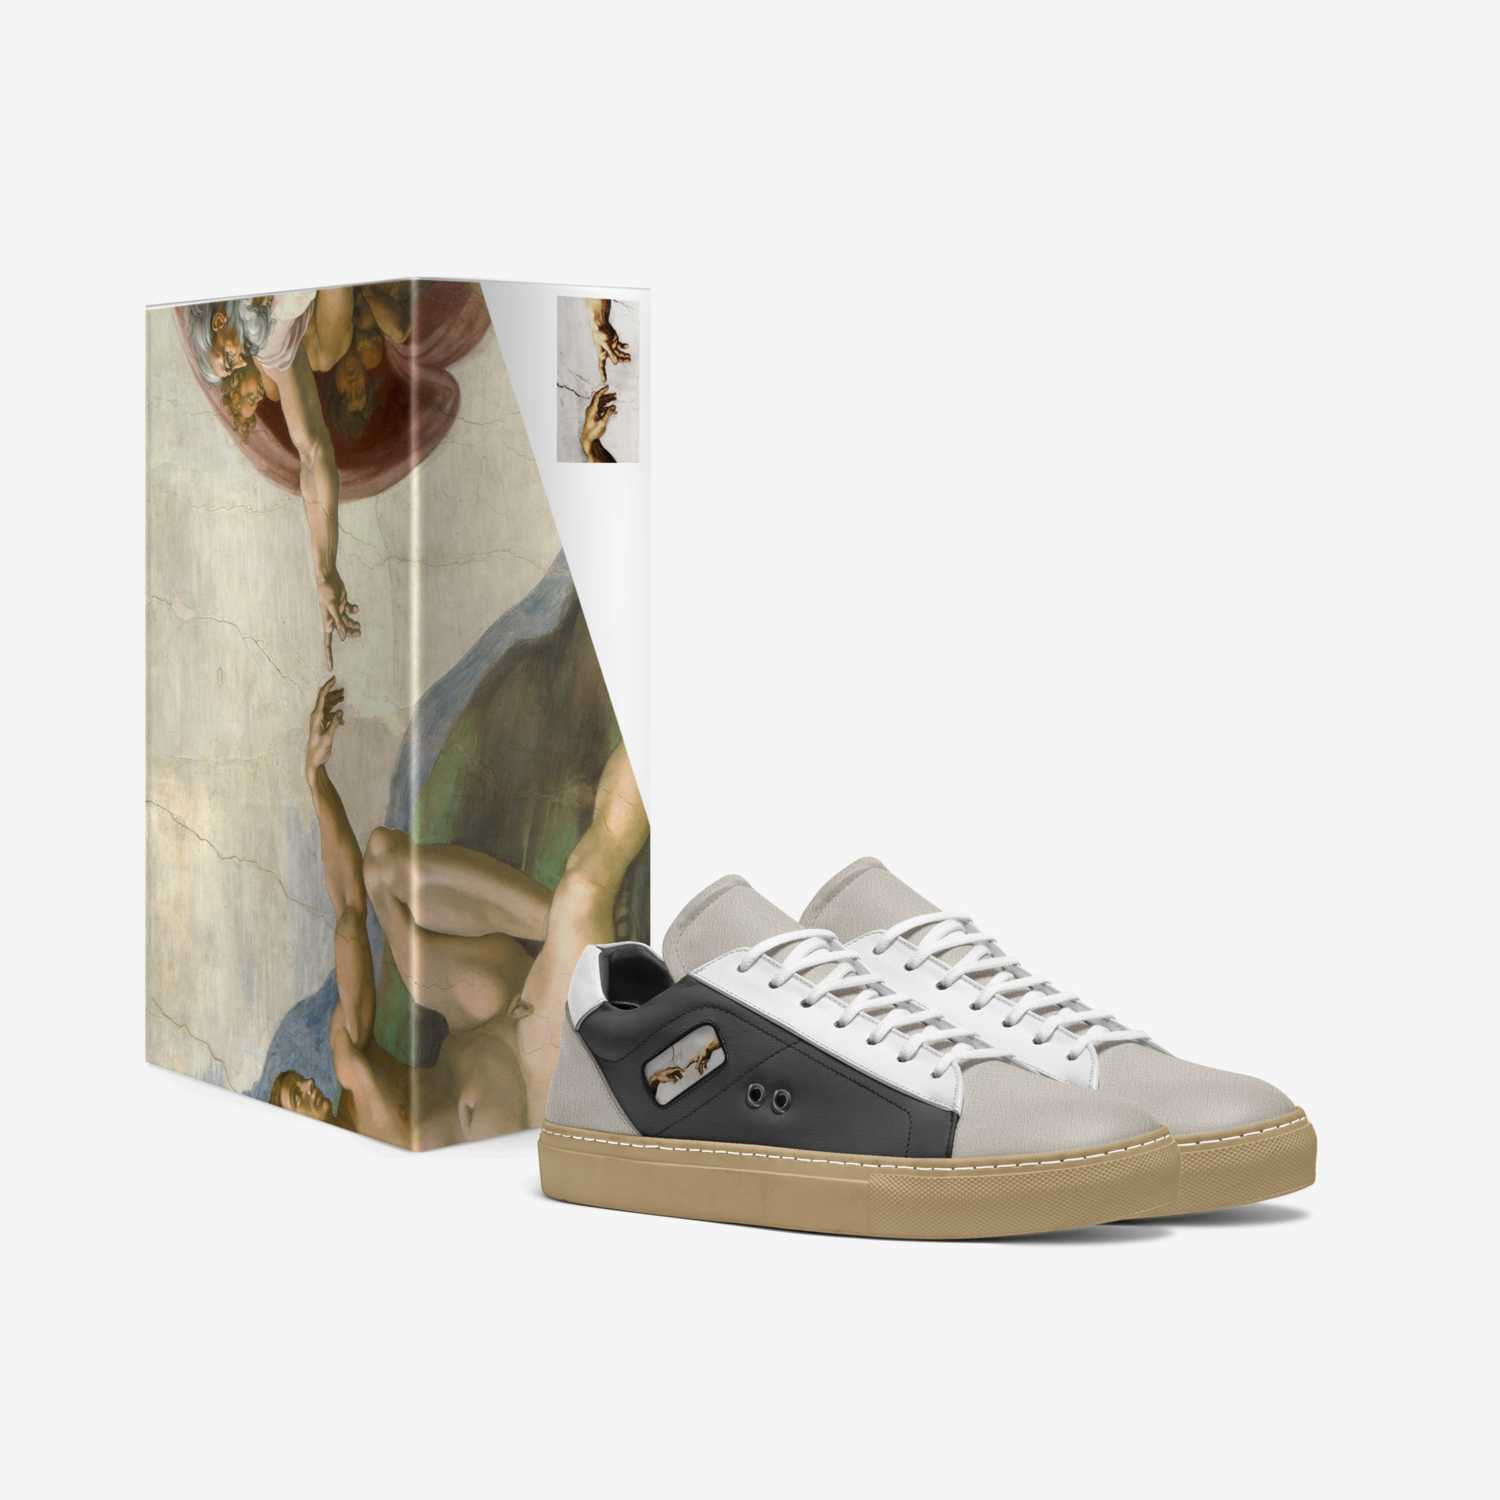 deZire custom made in Italy shoes by Joseph Paladino | Box view